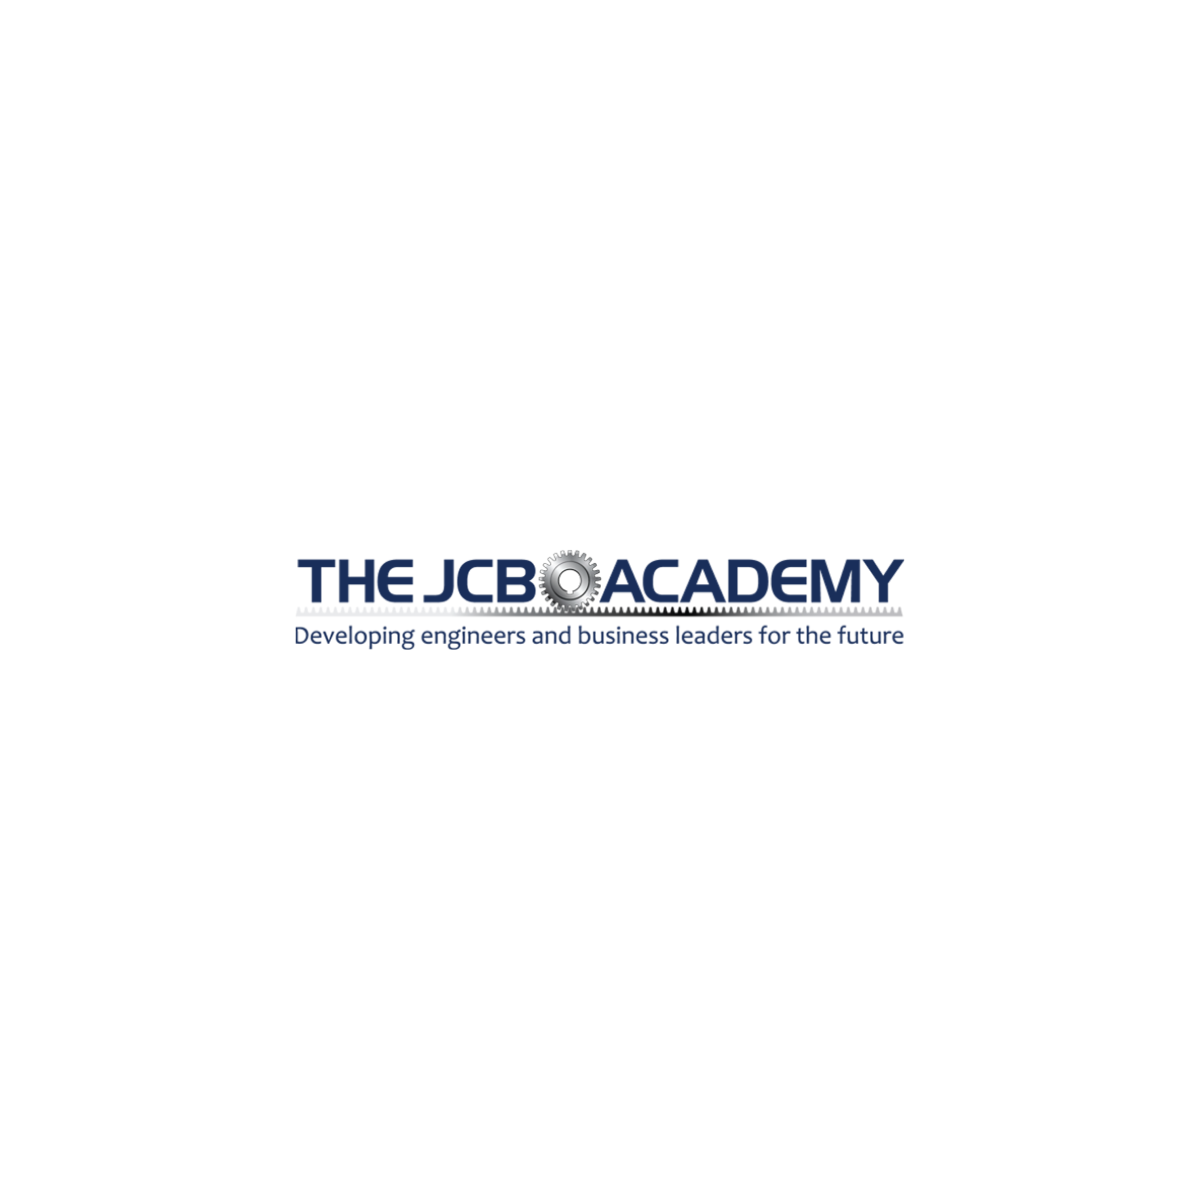 The JCB Academy logo